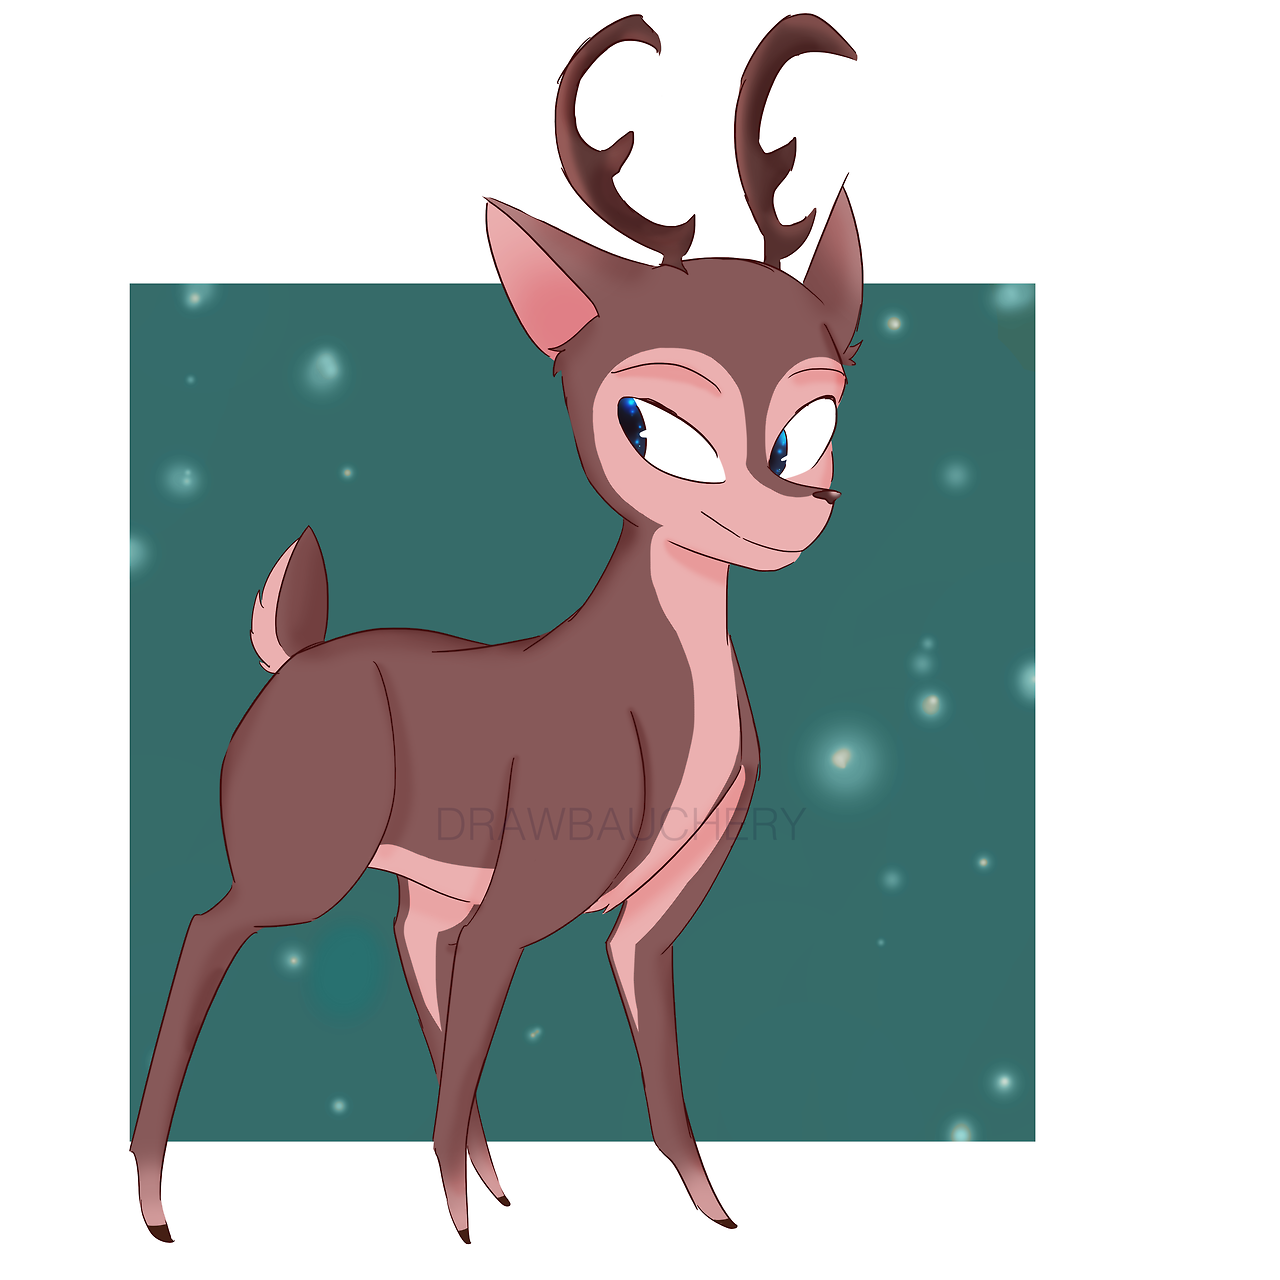 drawbauchery: MER CHISMAS!!! Have some reindeer babs bonus:   fuck it it’s not